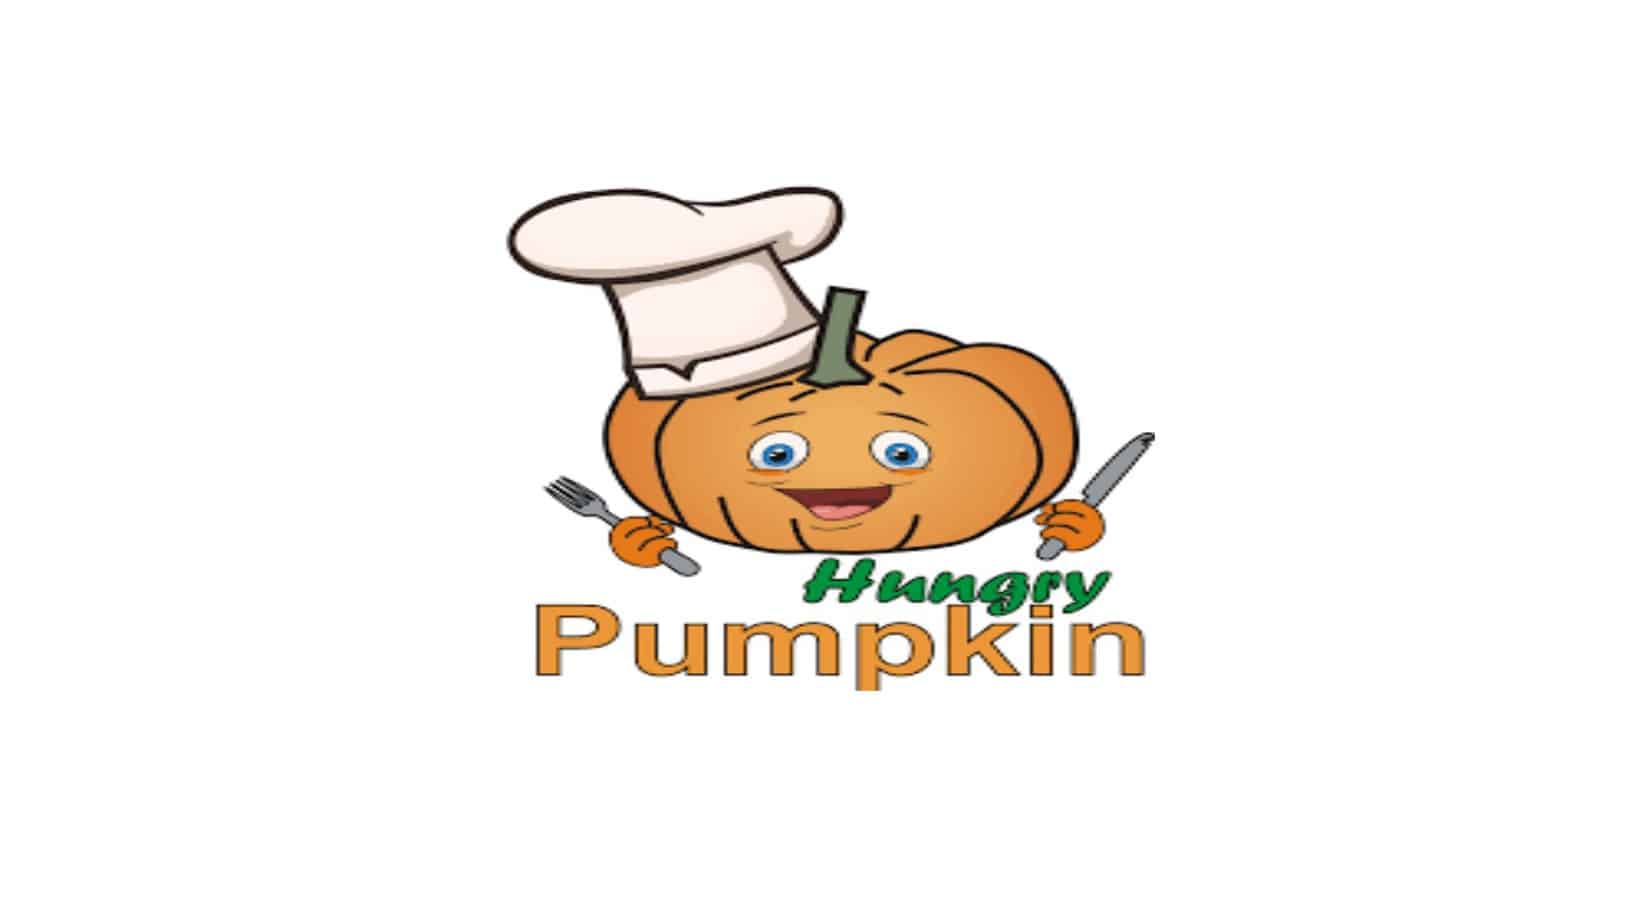 Hungry Pumpkin